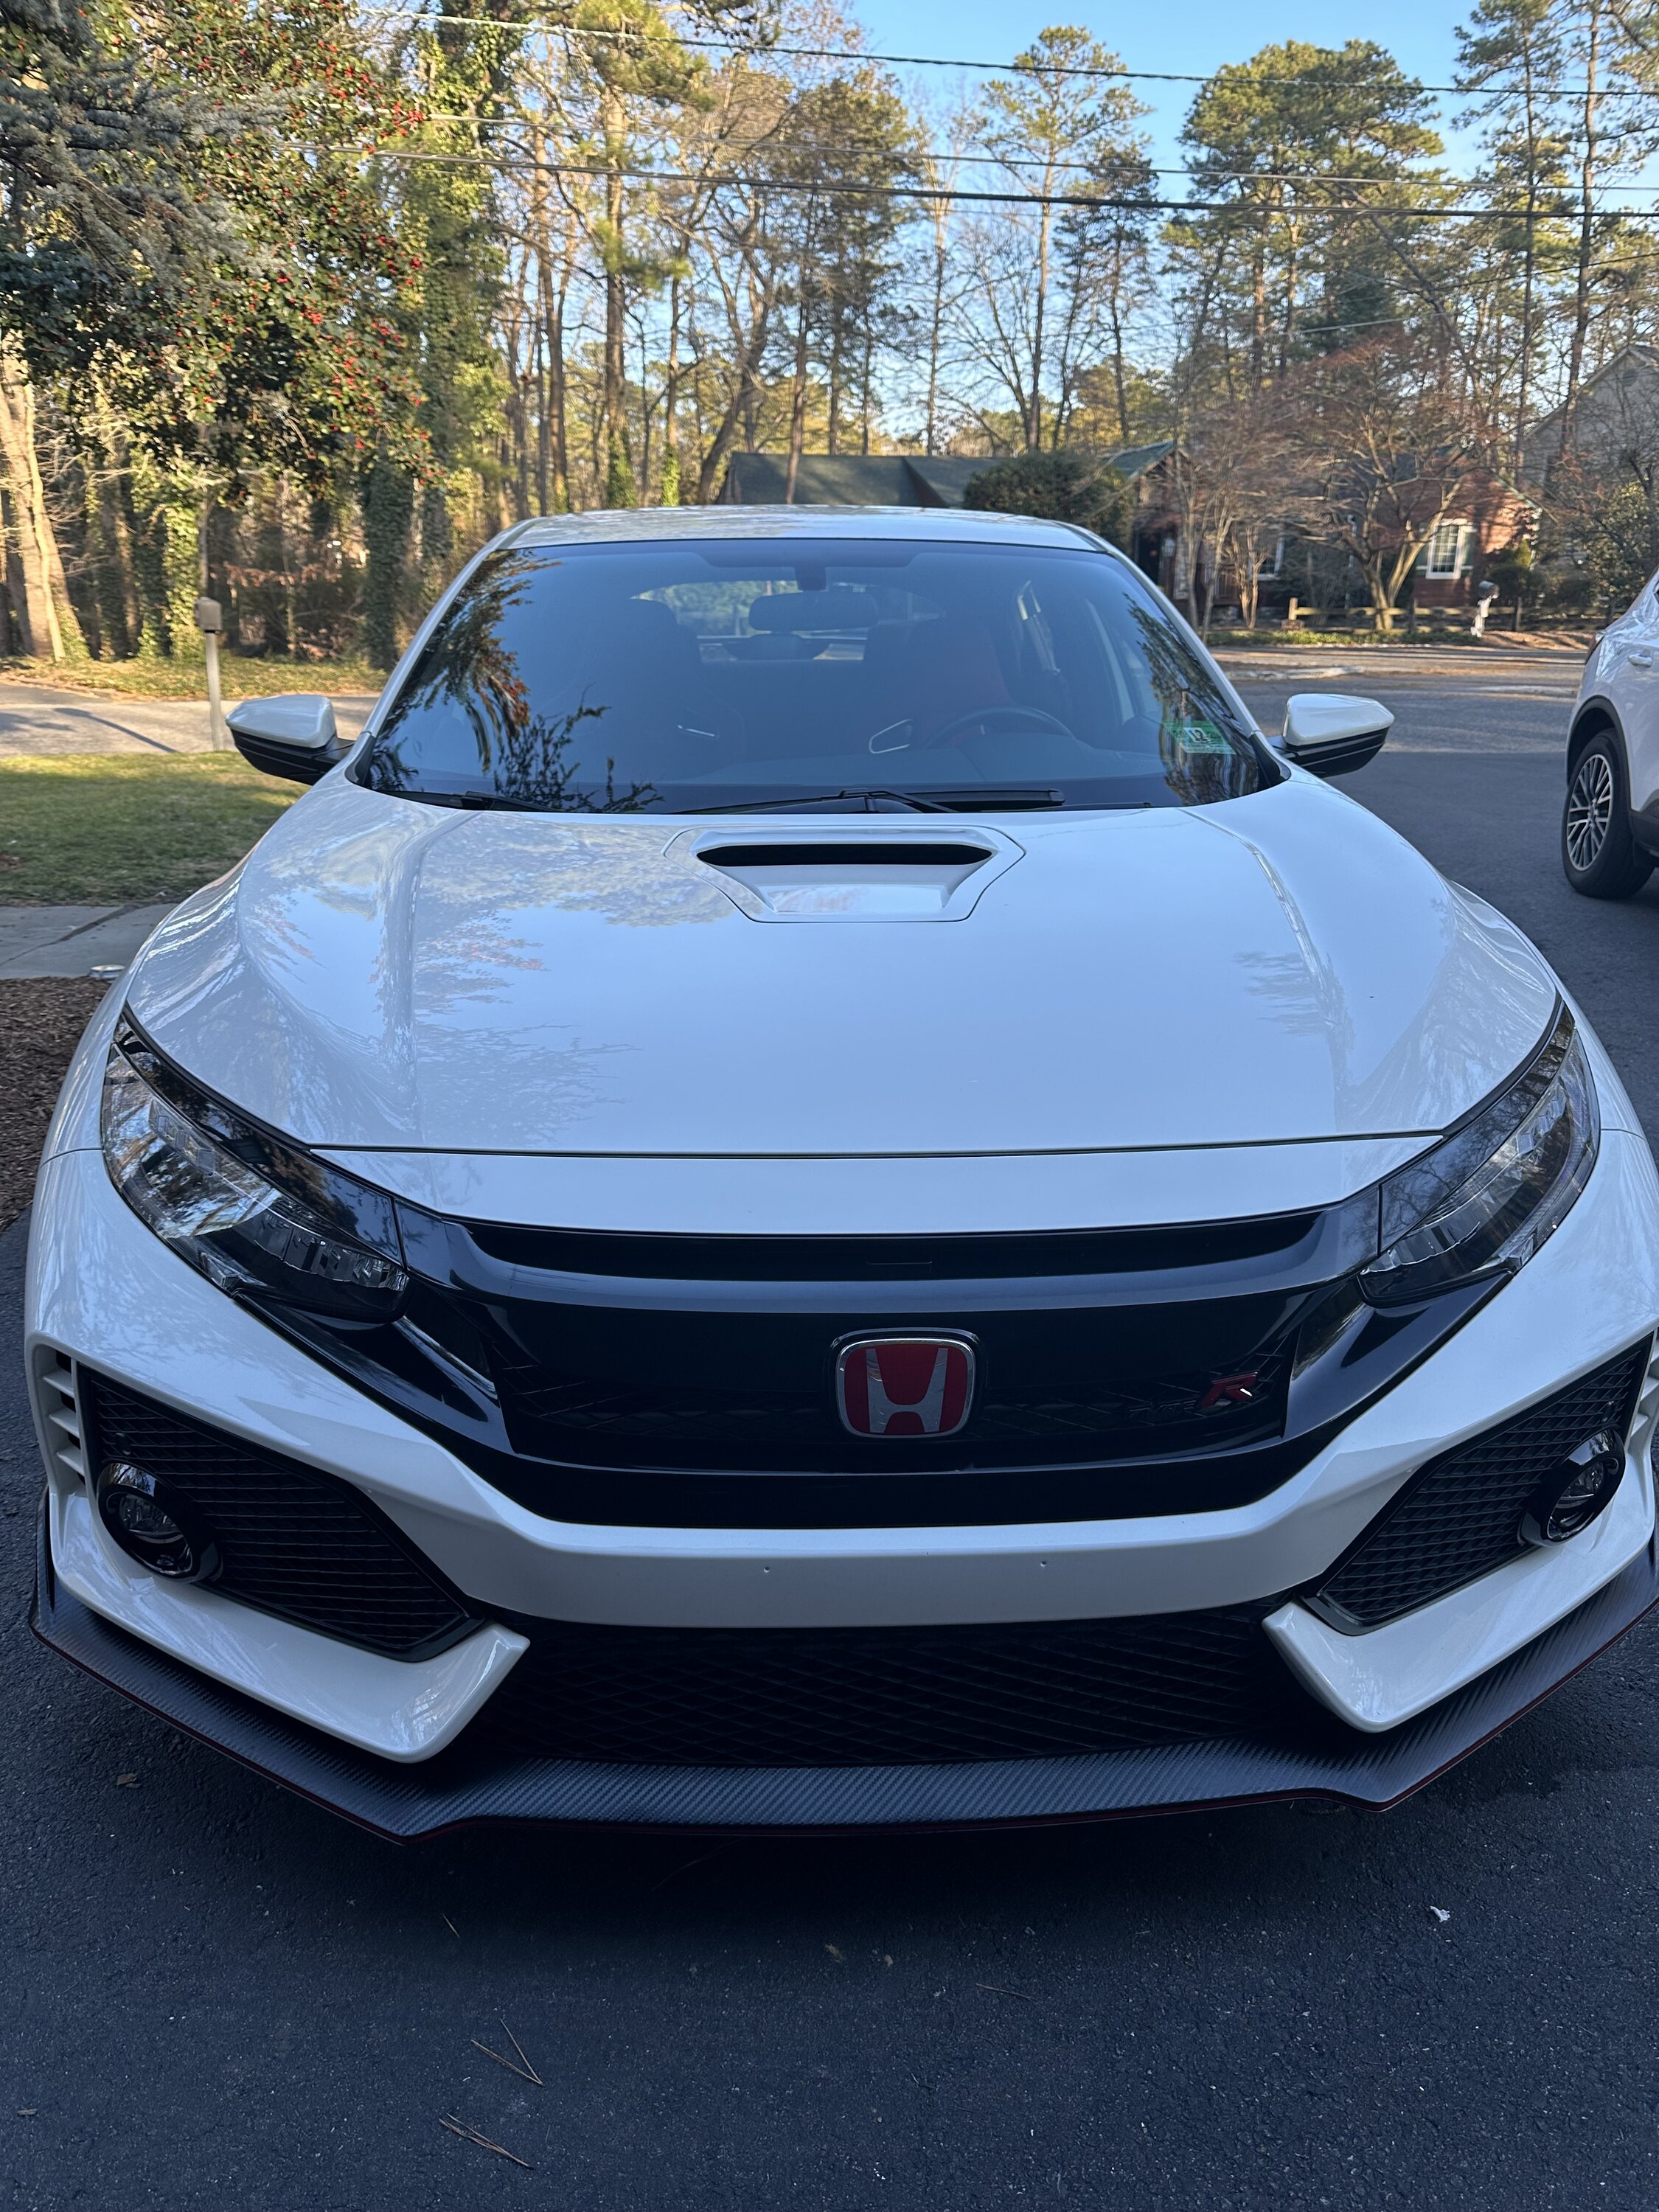 Honda Civic 10th gen 2018 CW Type R - Sold IMG_4982